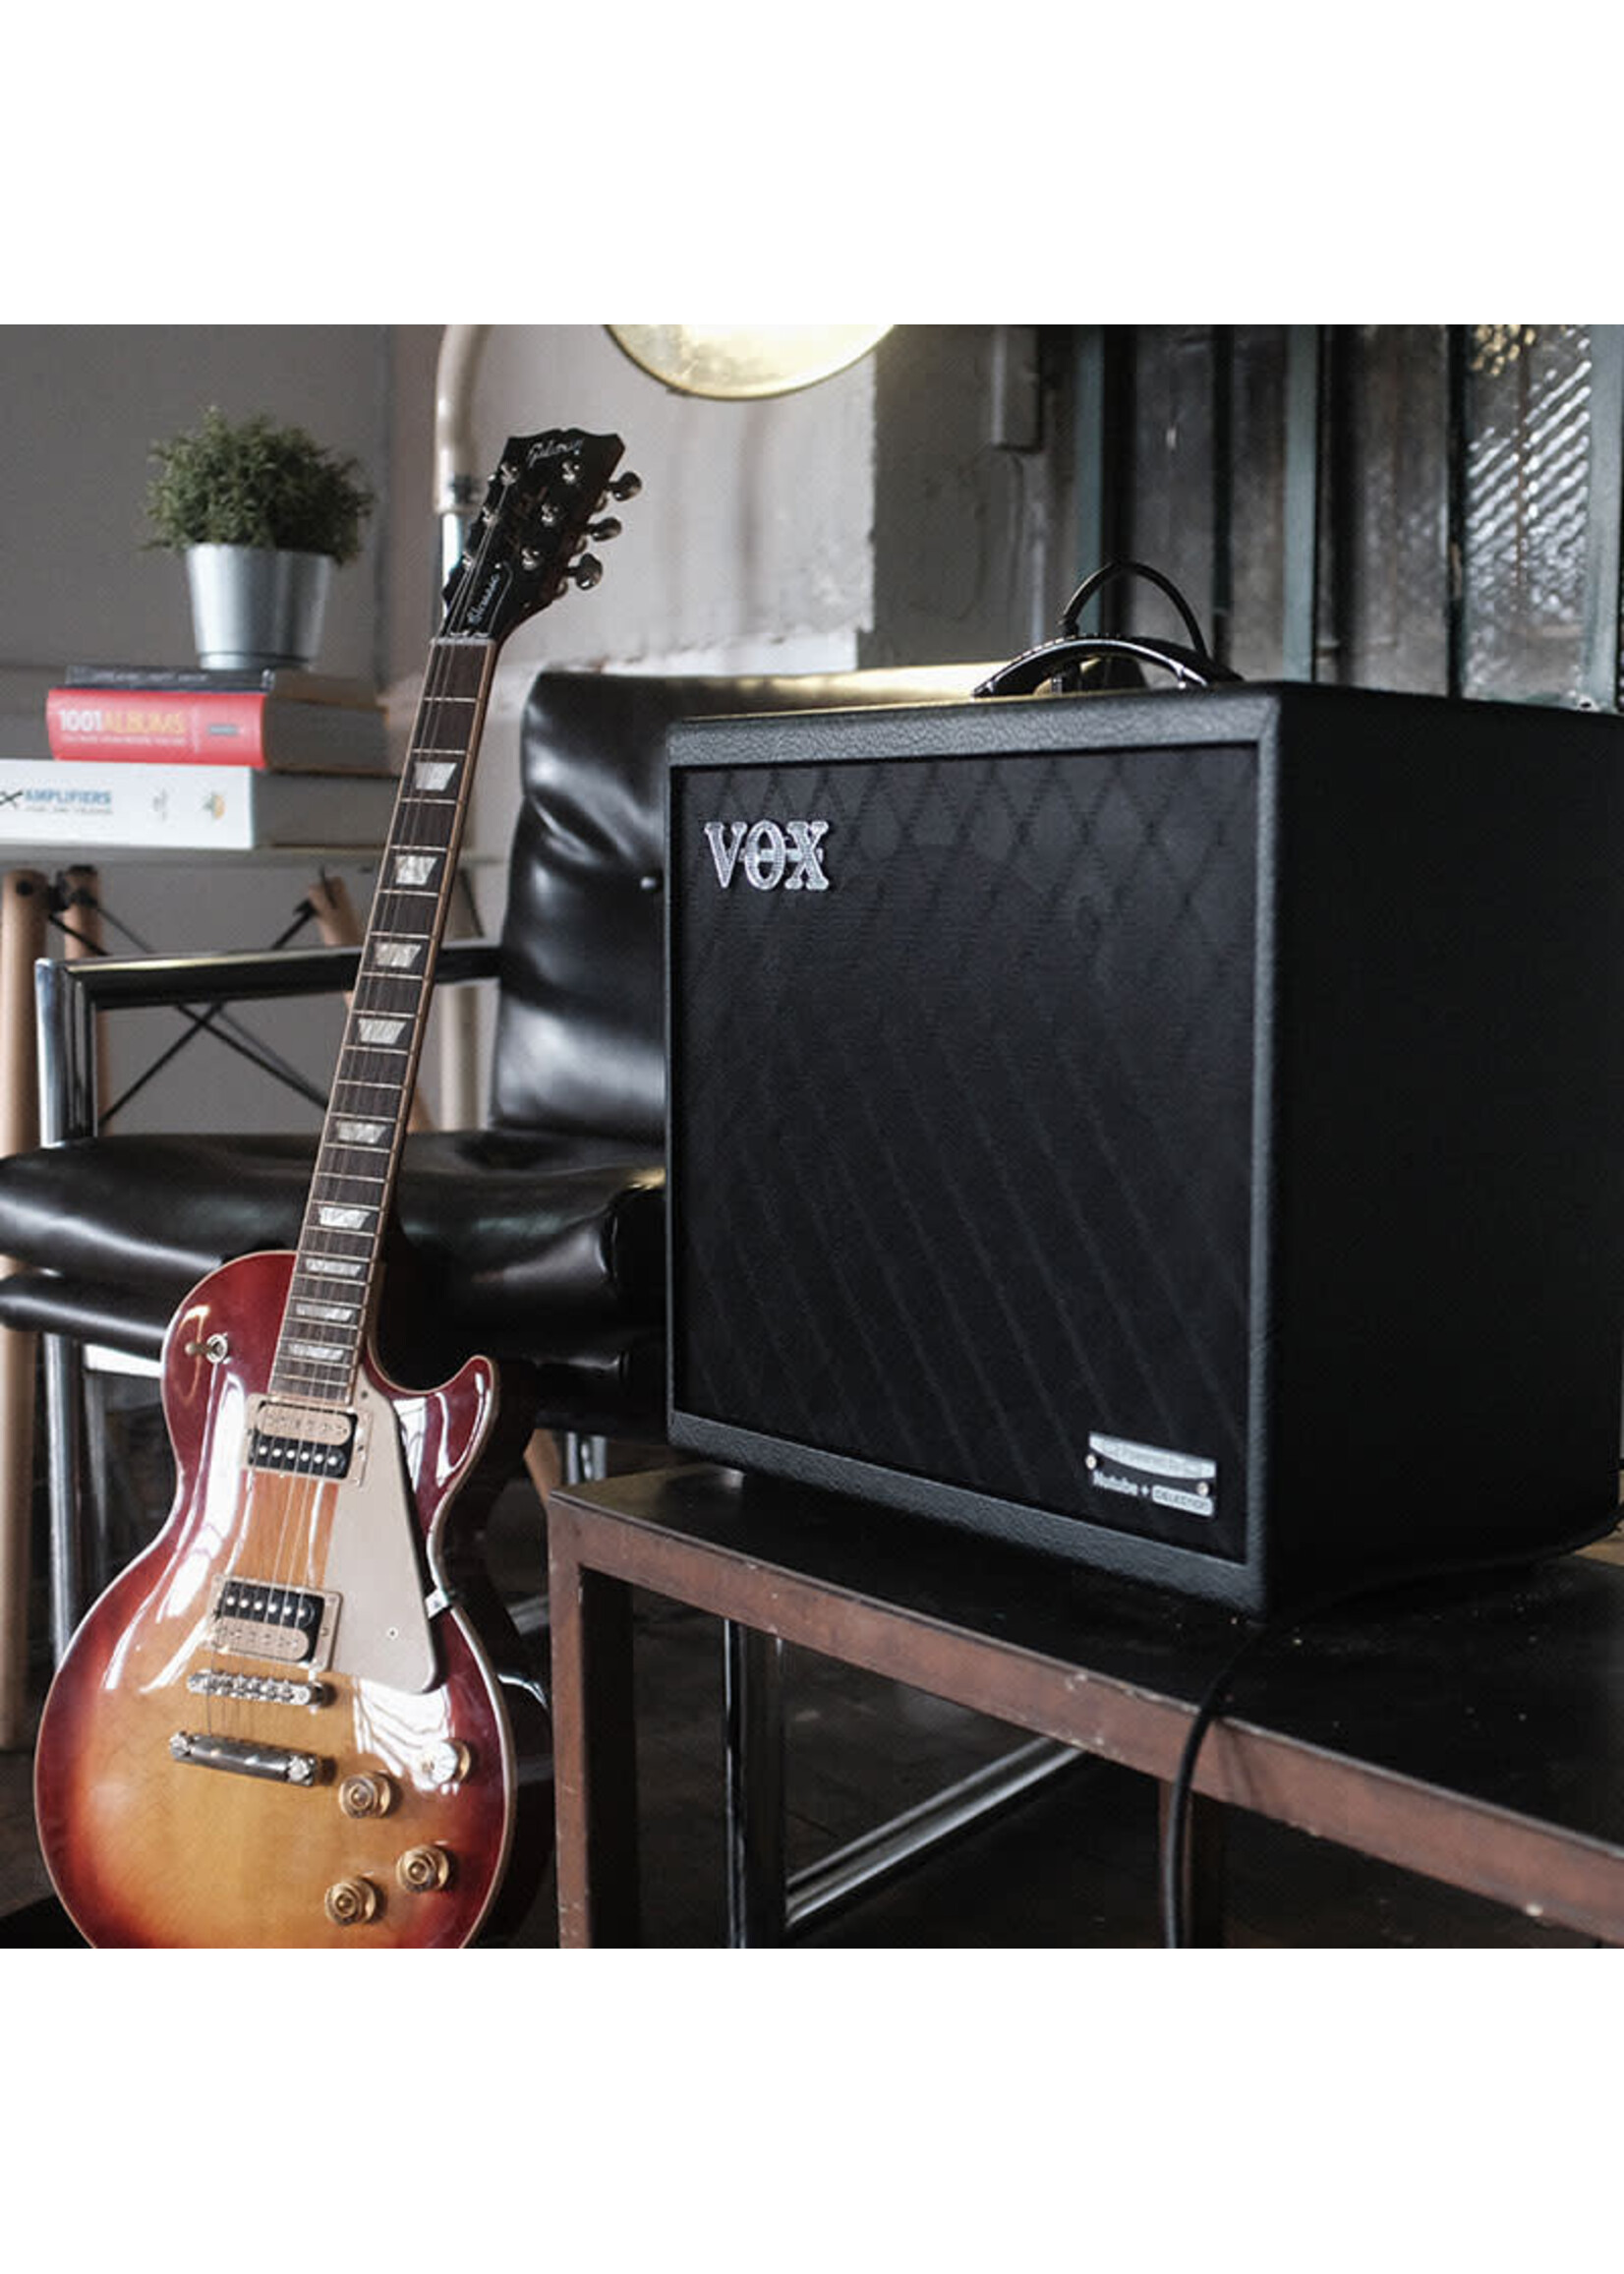 Vox Vox Amplifier Cambridge 50